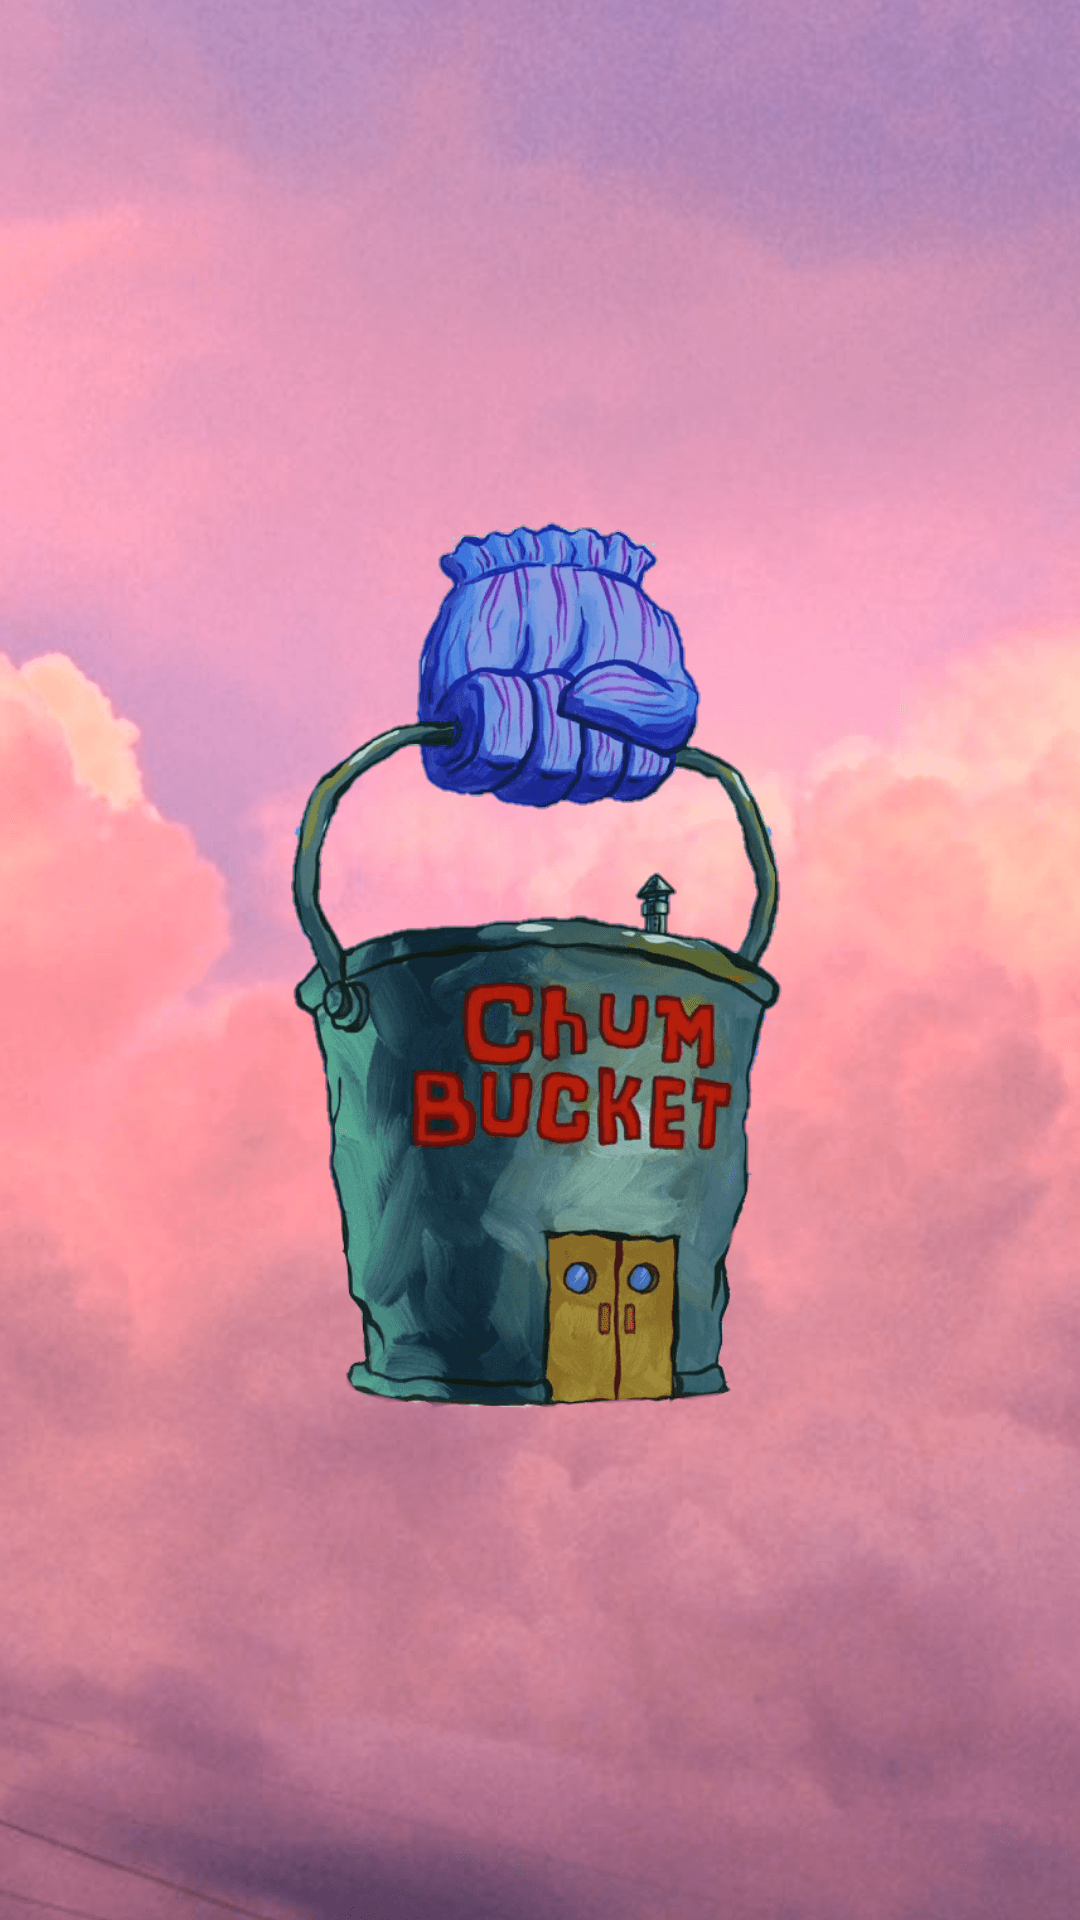 Krusty Krab & Chum Bucket Spongebob Aesthetic Wallpaper